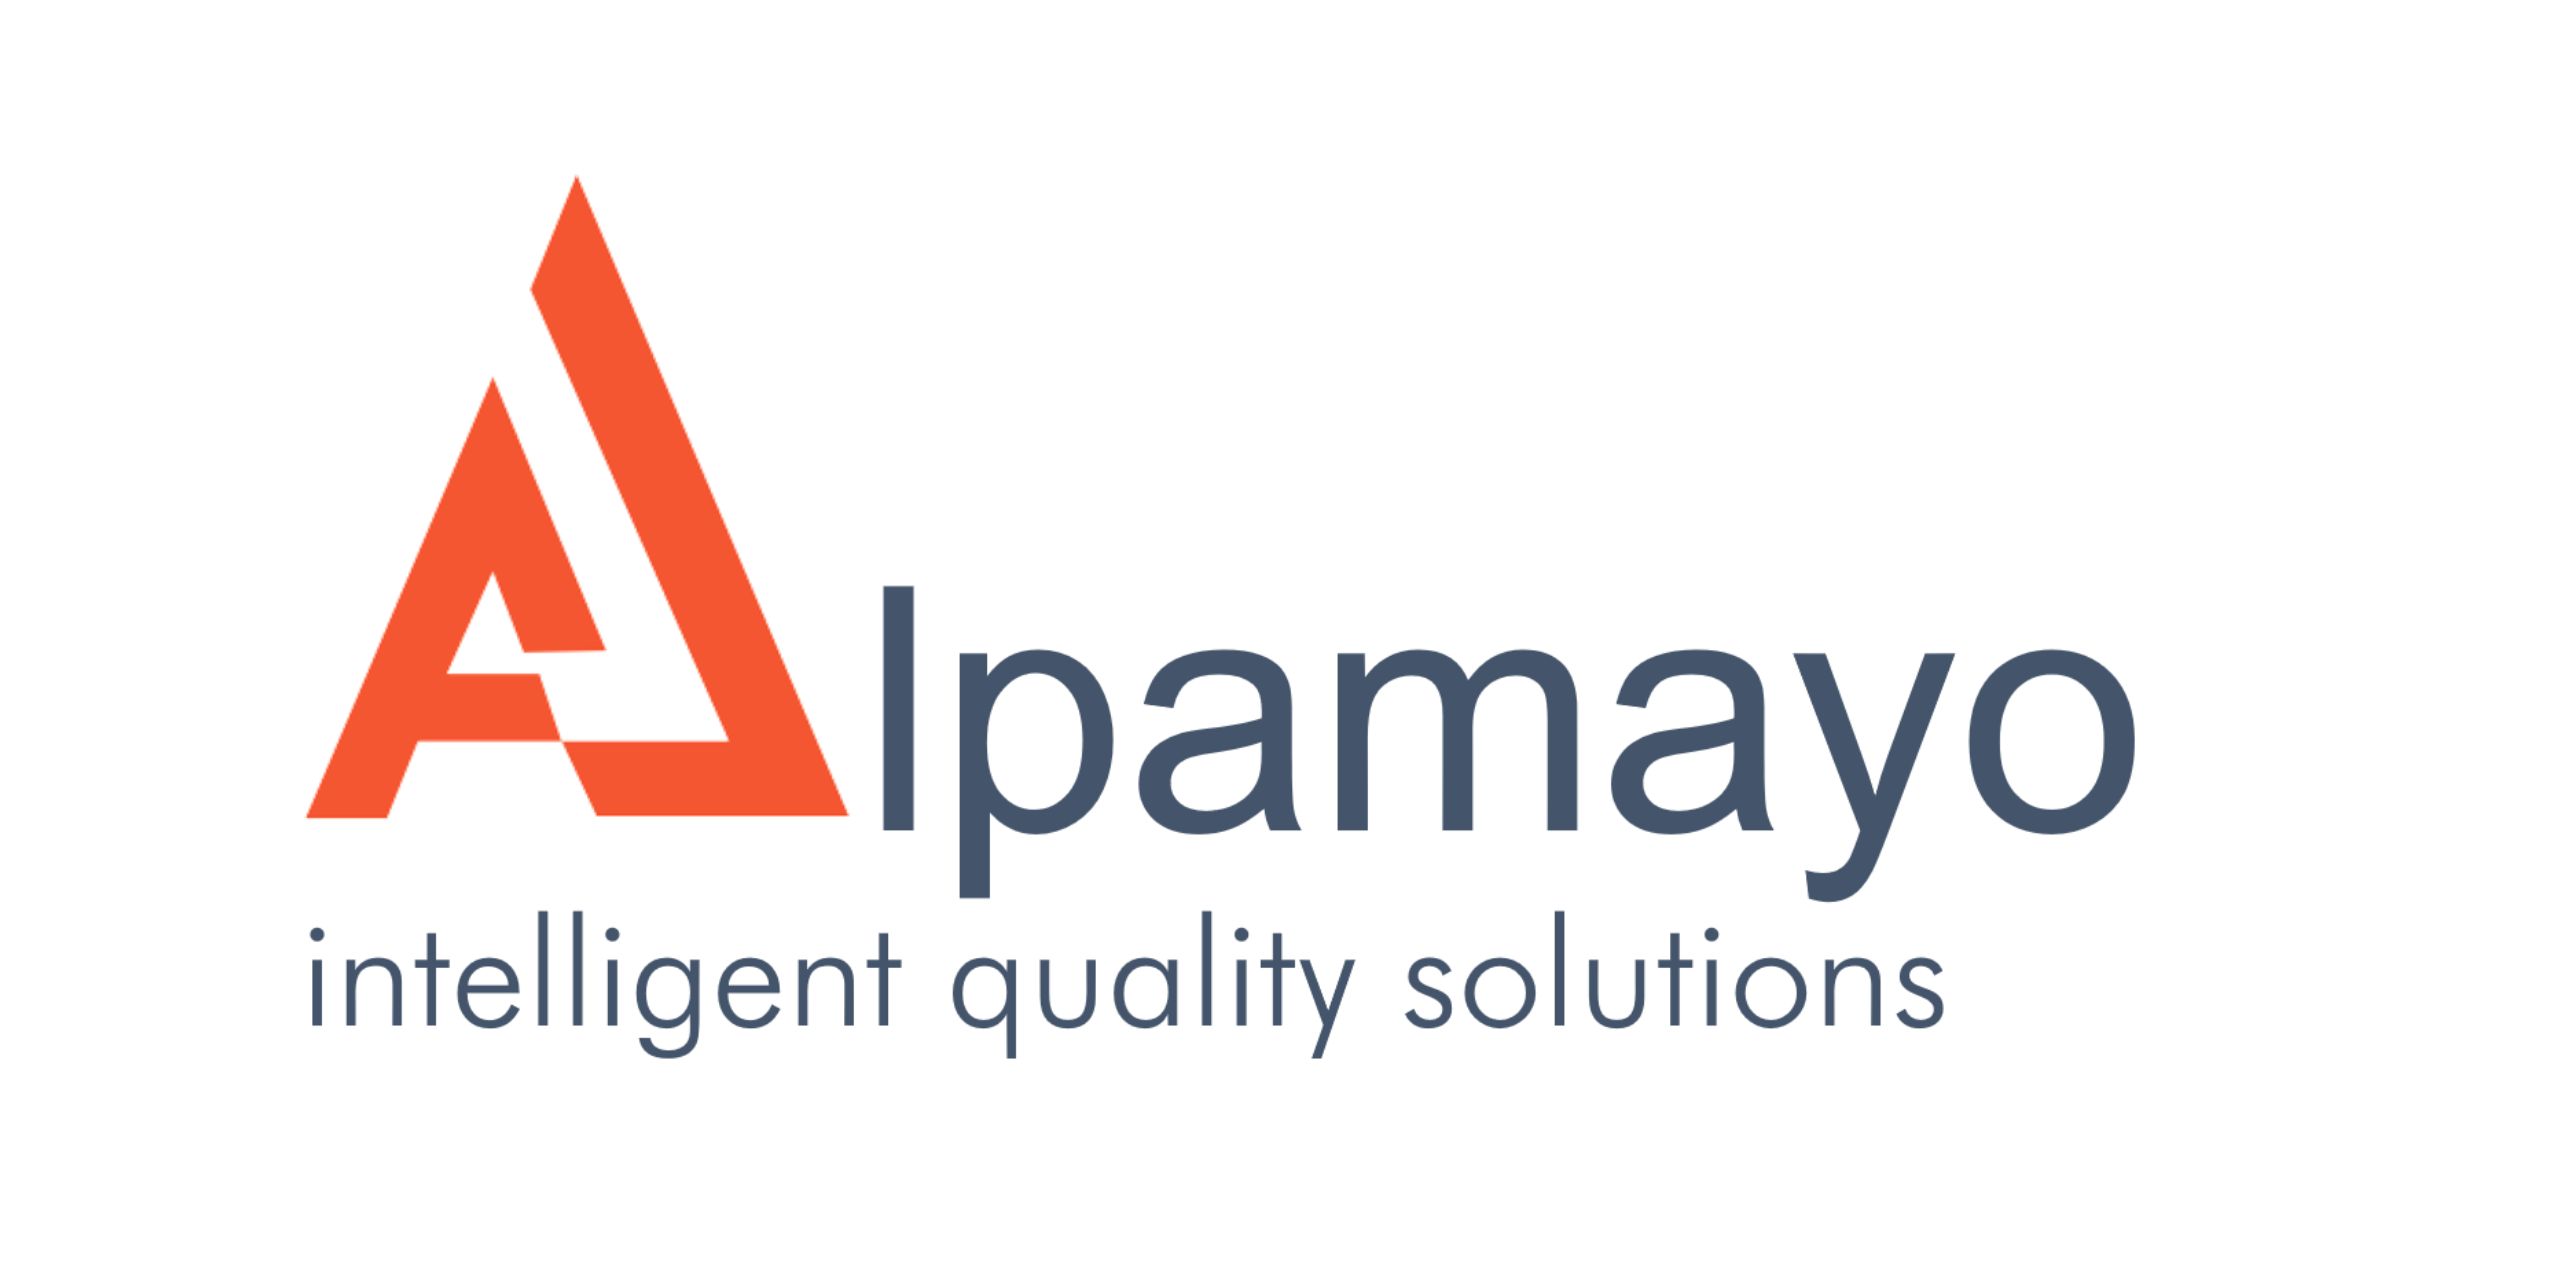 Alpamayo Ingelligent quality solution